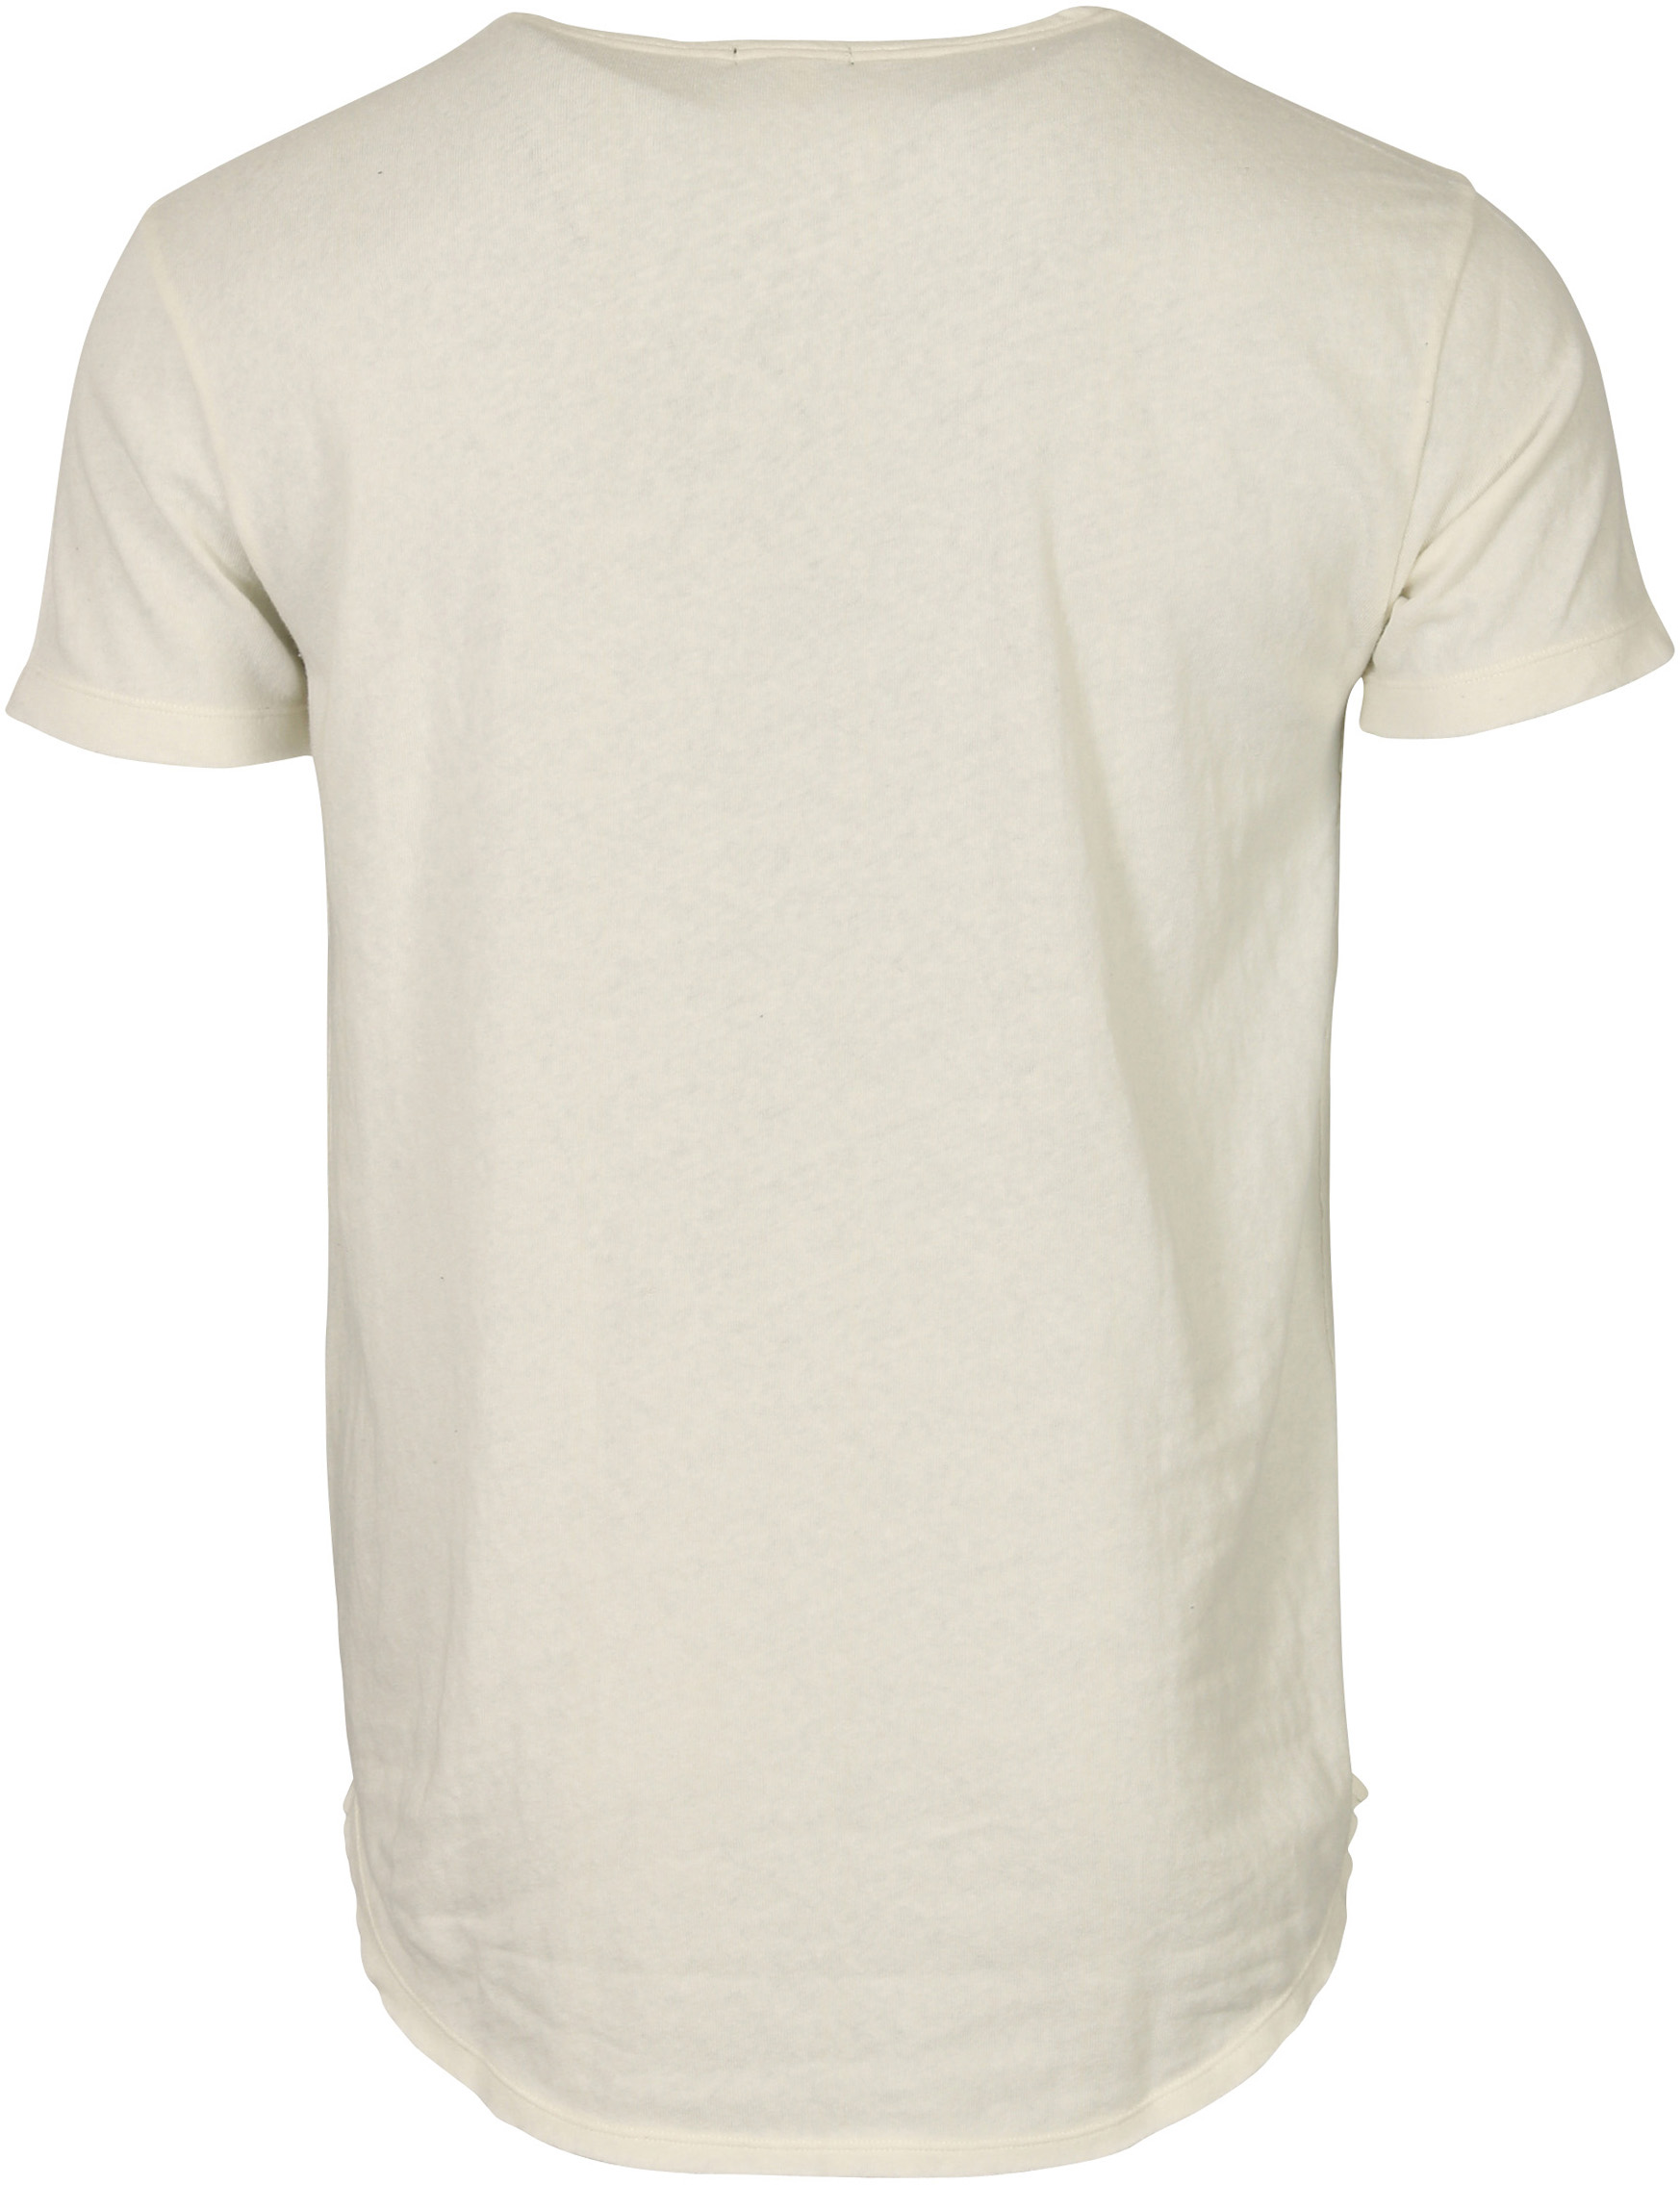 R13 Pocket T-Shirt White L